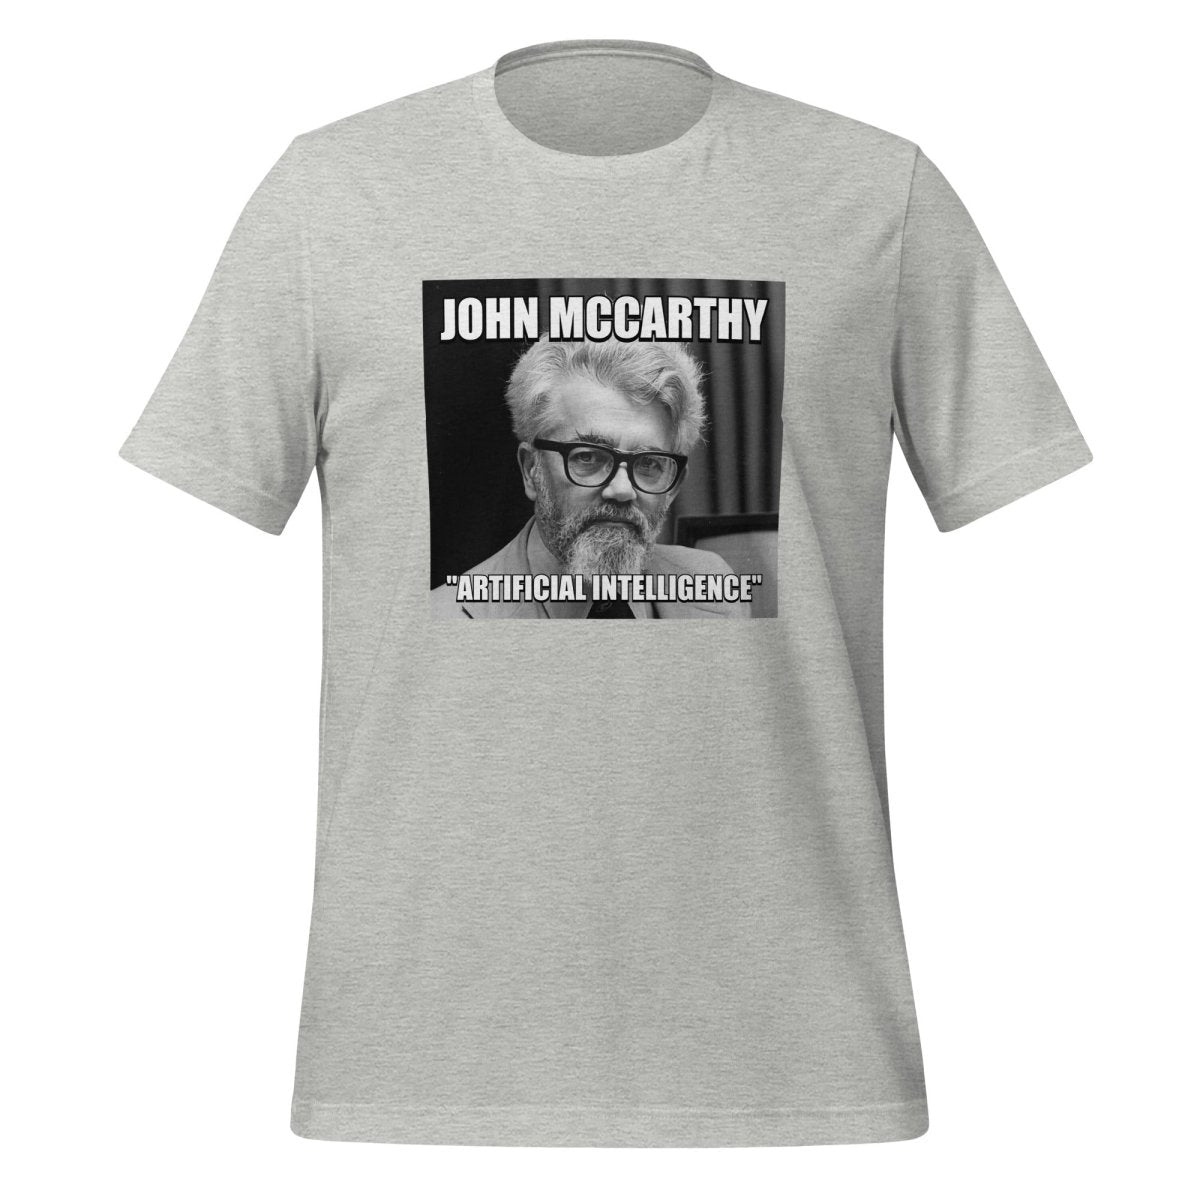 John McCarthy "Artificial Intelligence" T - Shirt (unisex) - Athletic Heather - AI Store